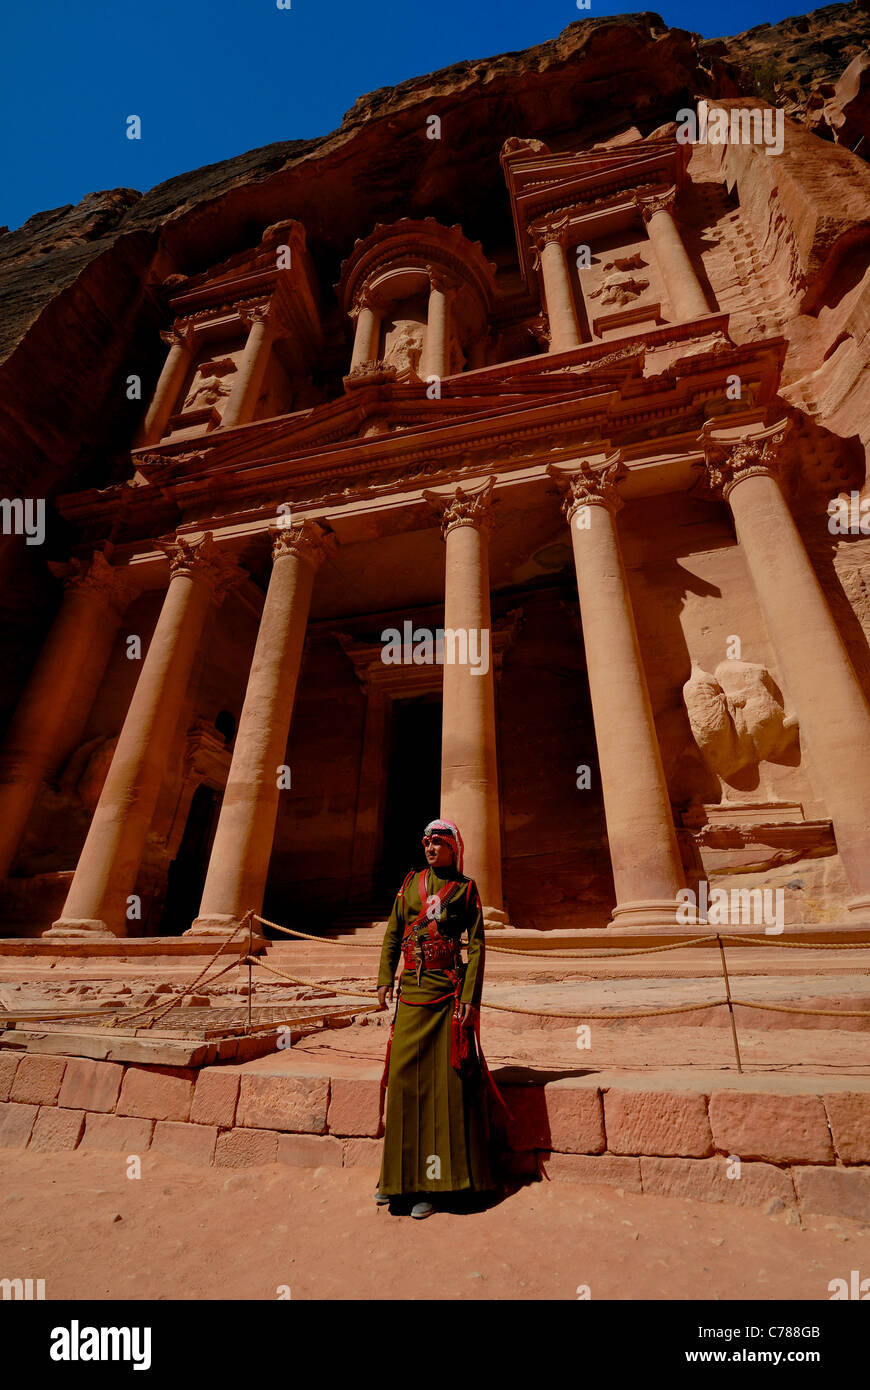 Jordanian soldier standing guard in frond of The treasury in Petra, Jordan. Stock Photo